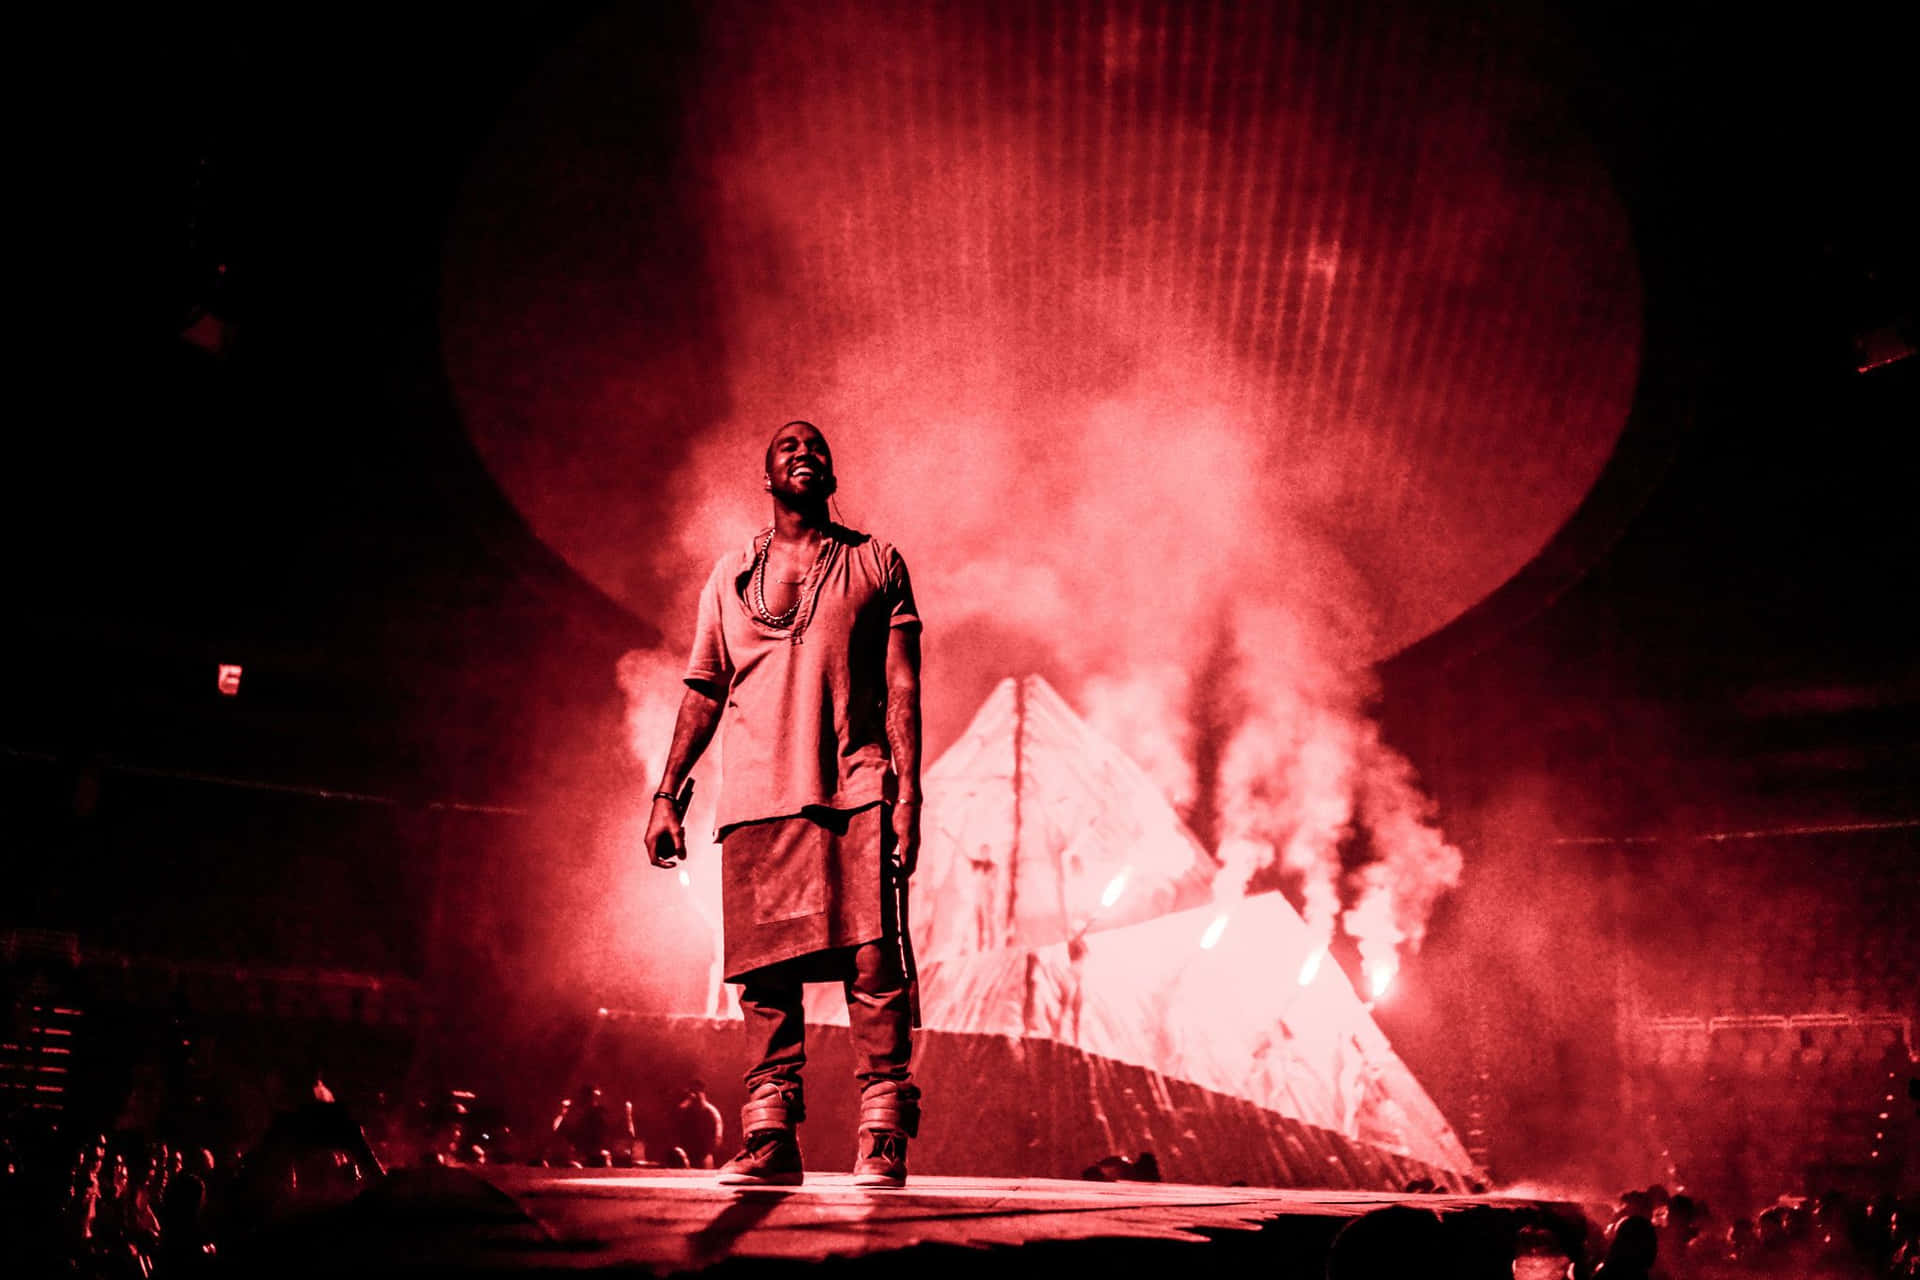 Hintergrundbildvon Kanye West